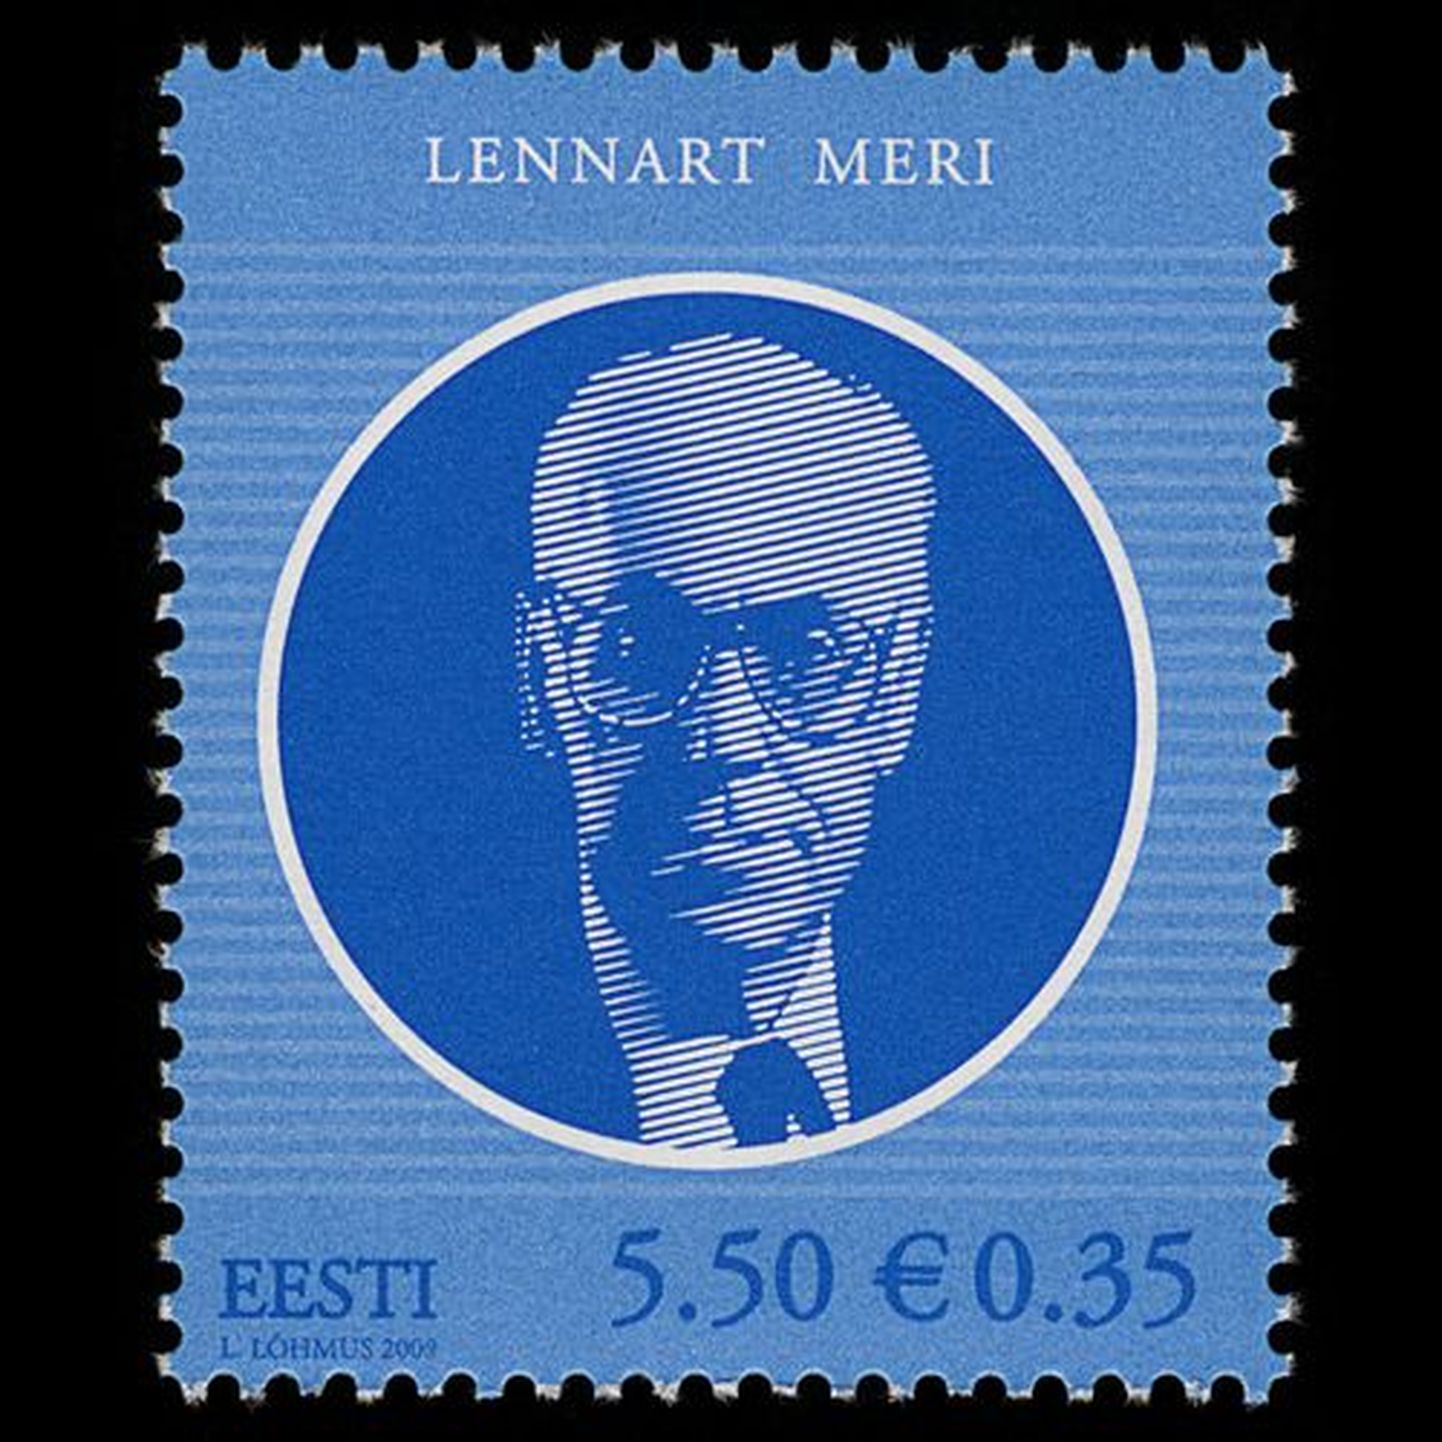 Lennart Meri postmark